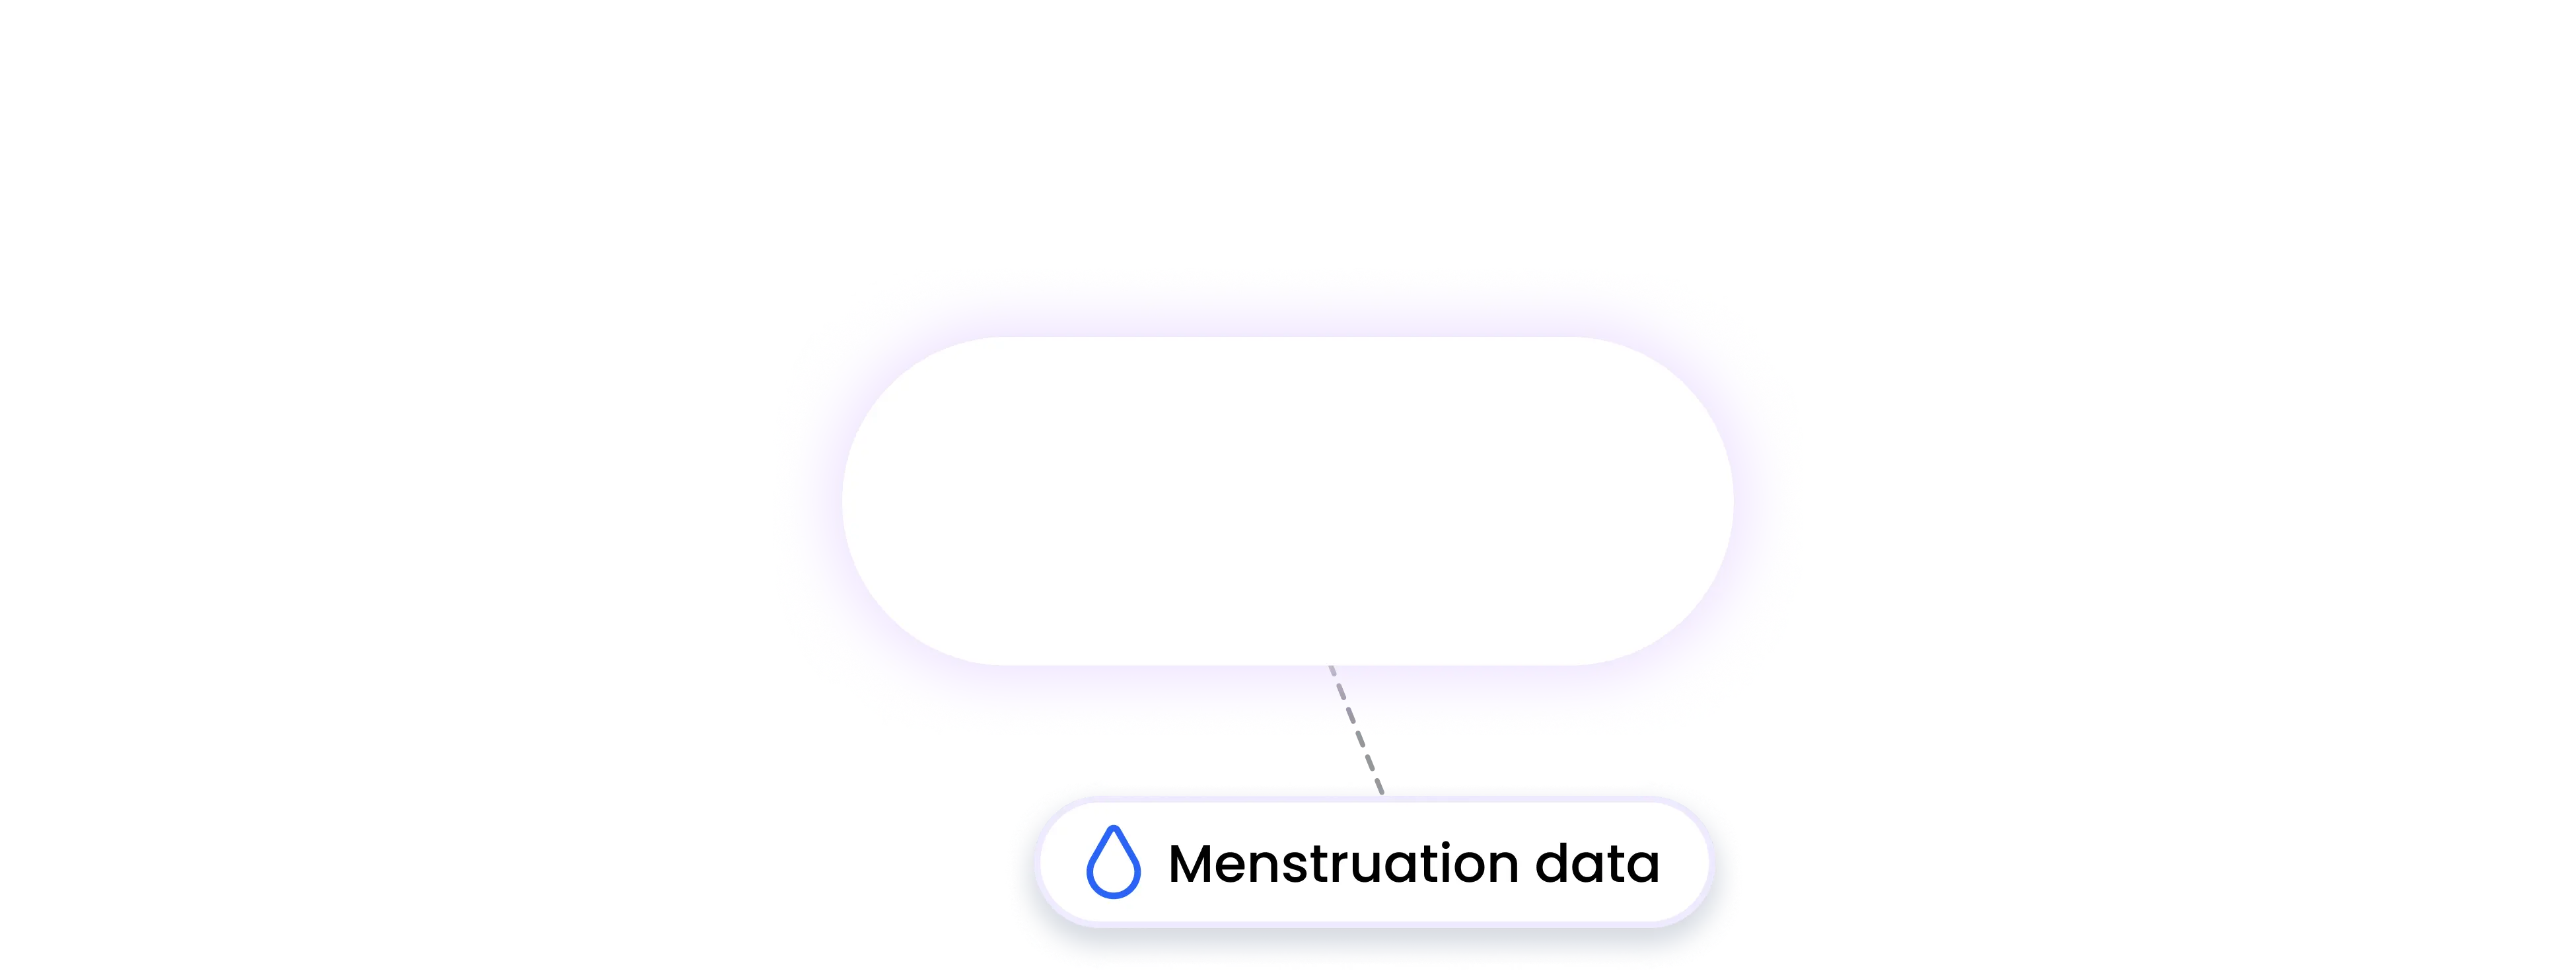 zwift integration MENSTRUATION data